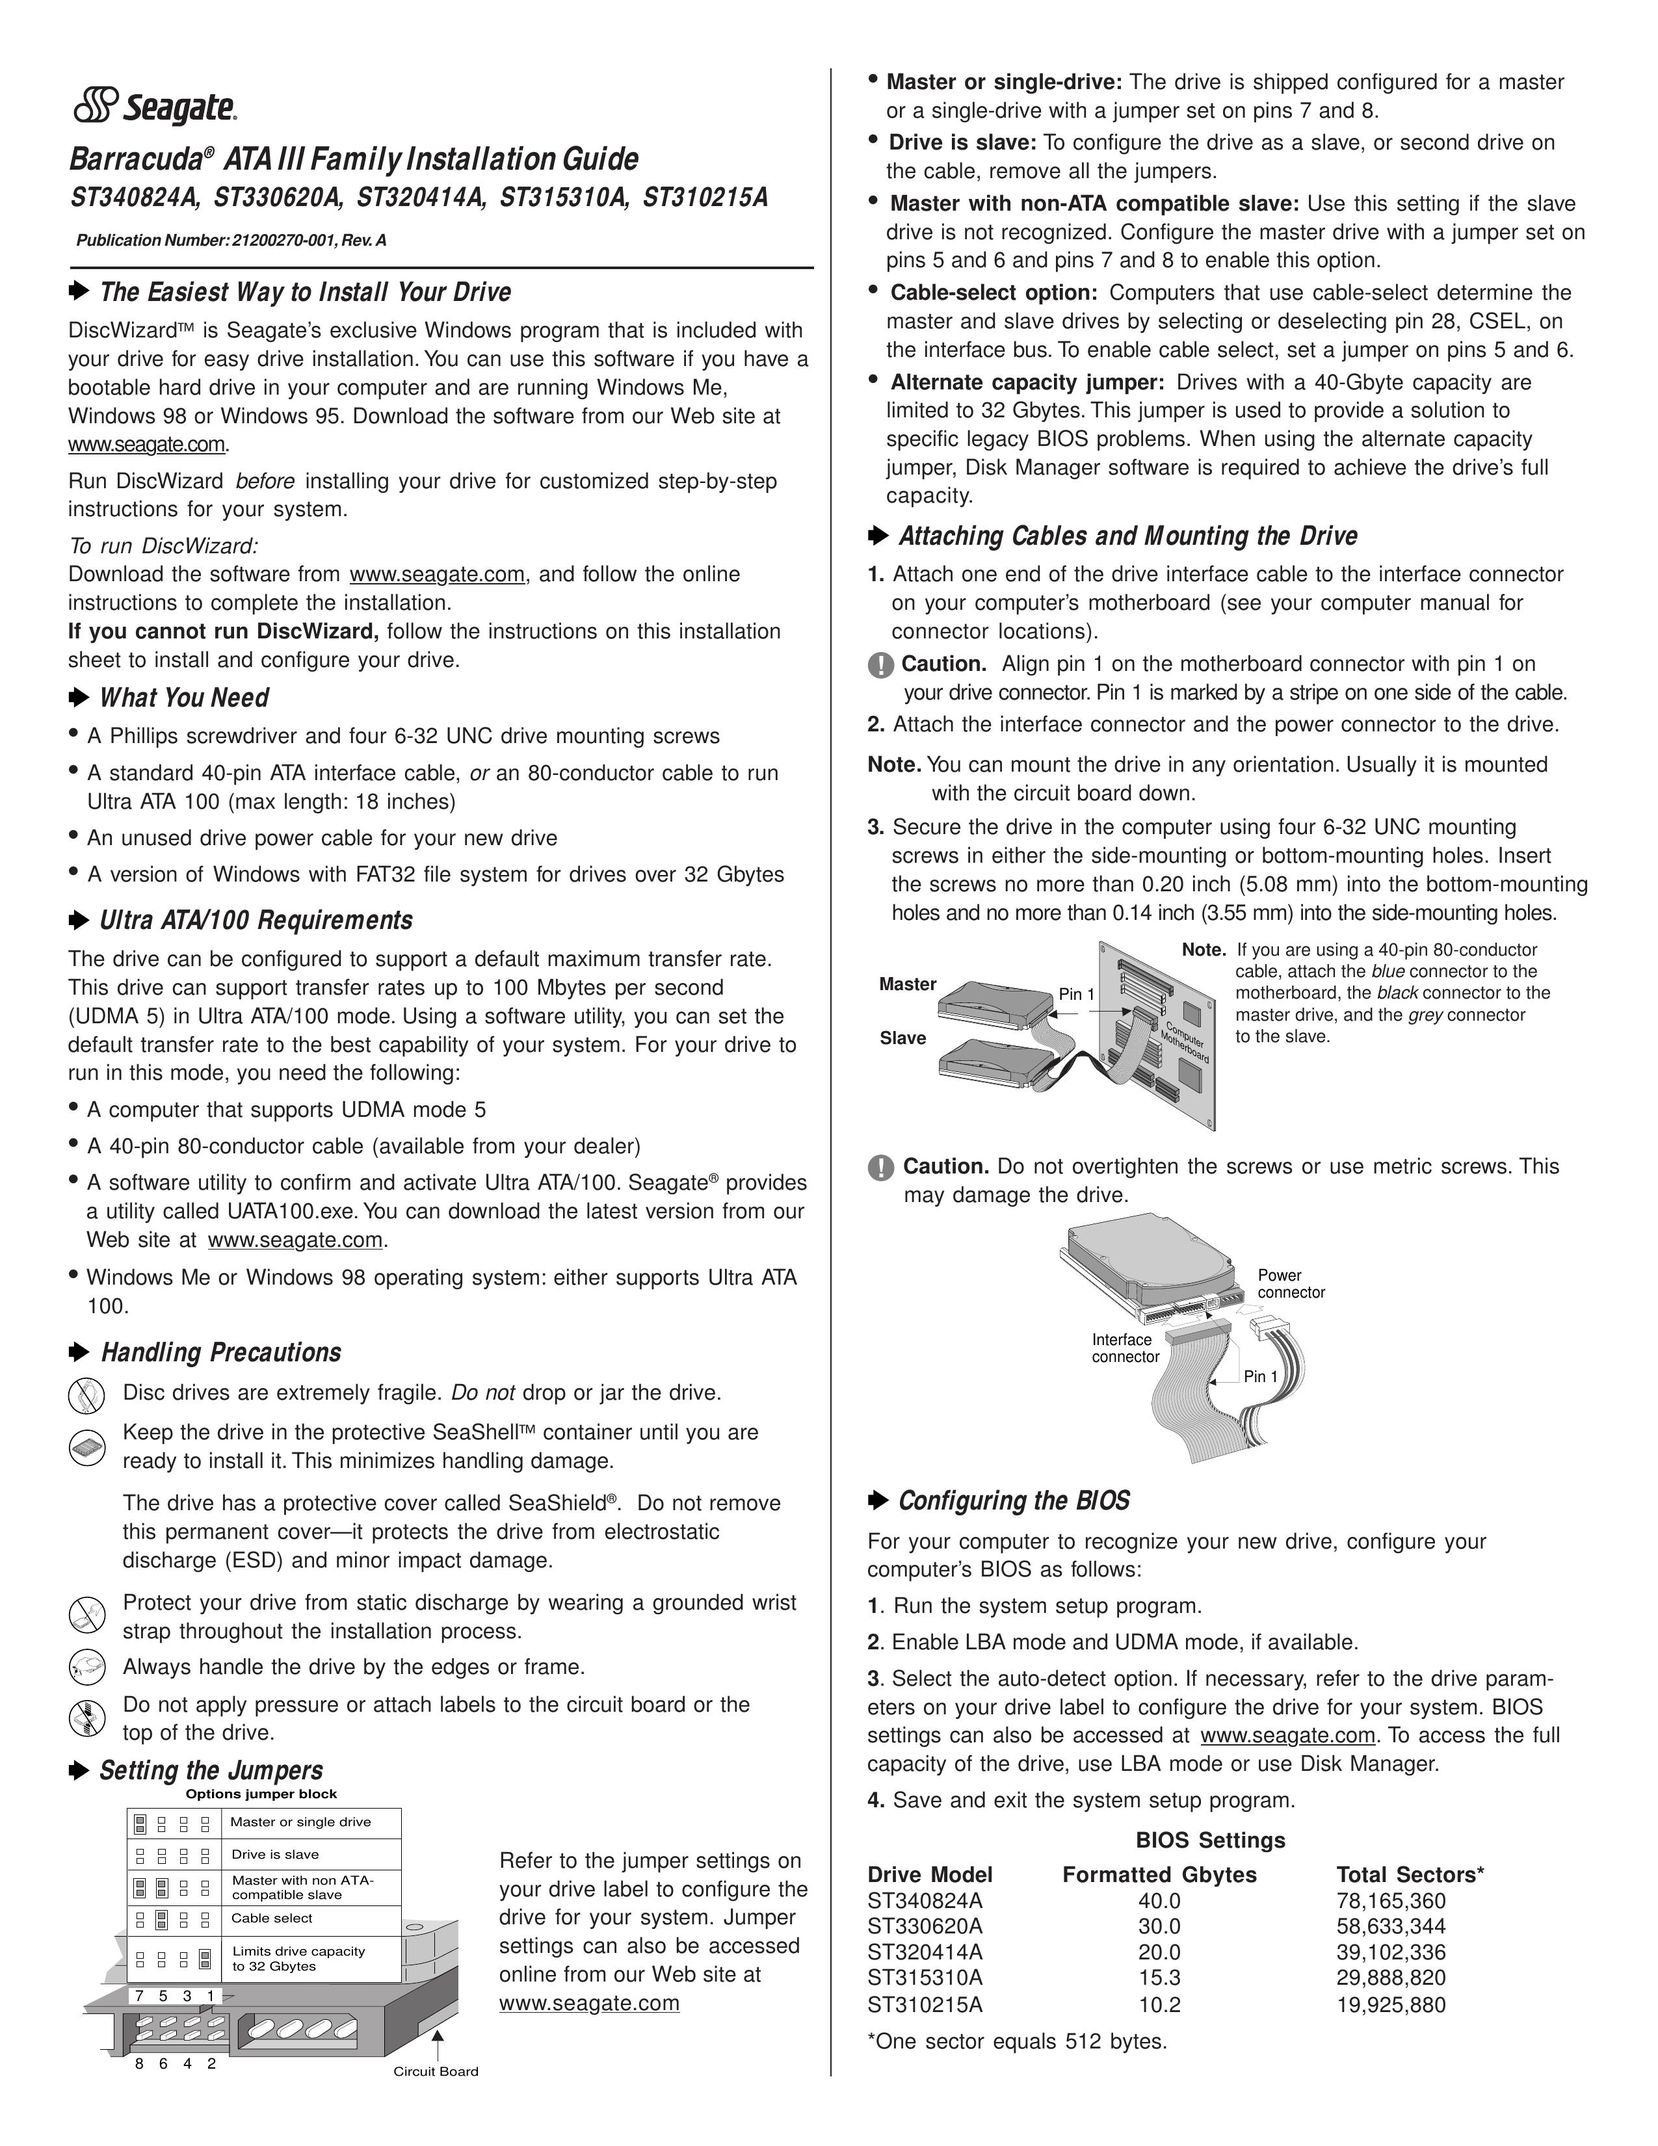 Barracuda Networks ST340824A Computer Drive User Manual